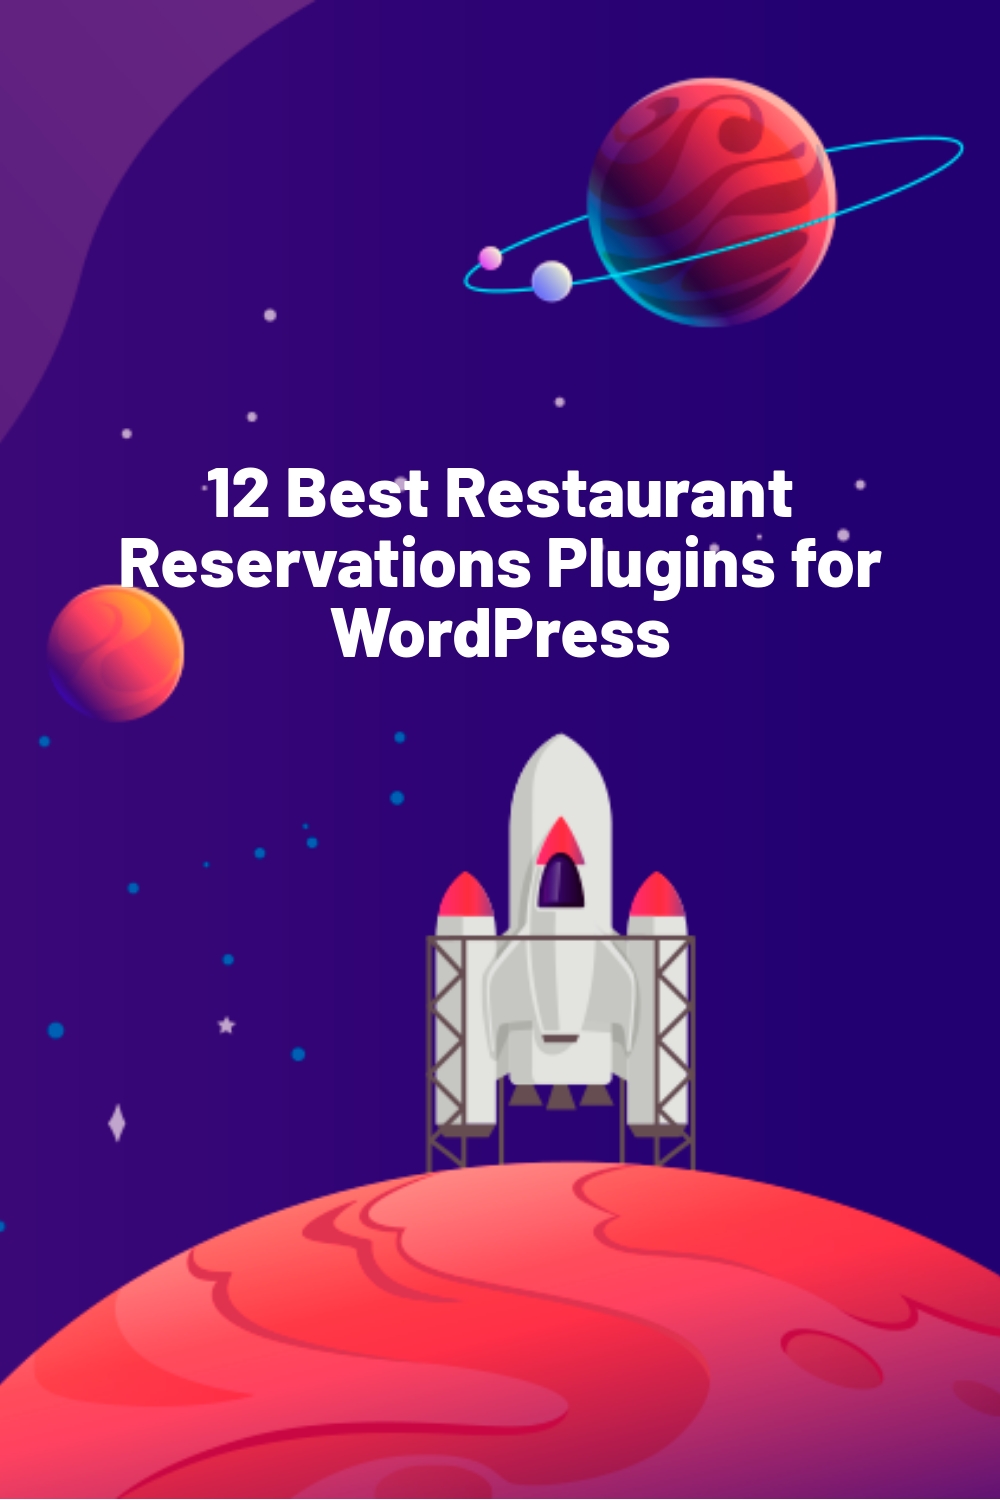 12 Best Restaurant Reservations Plugins for WordPress